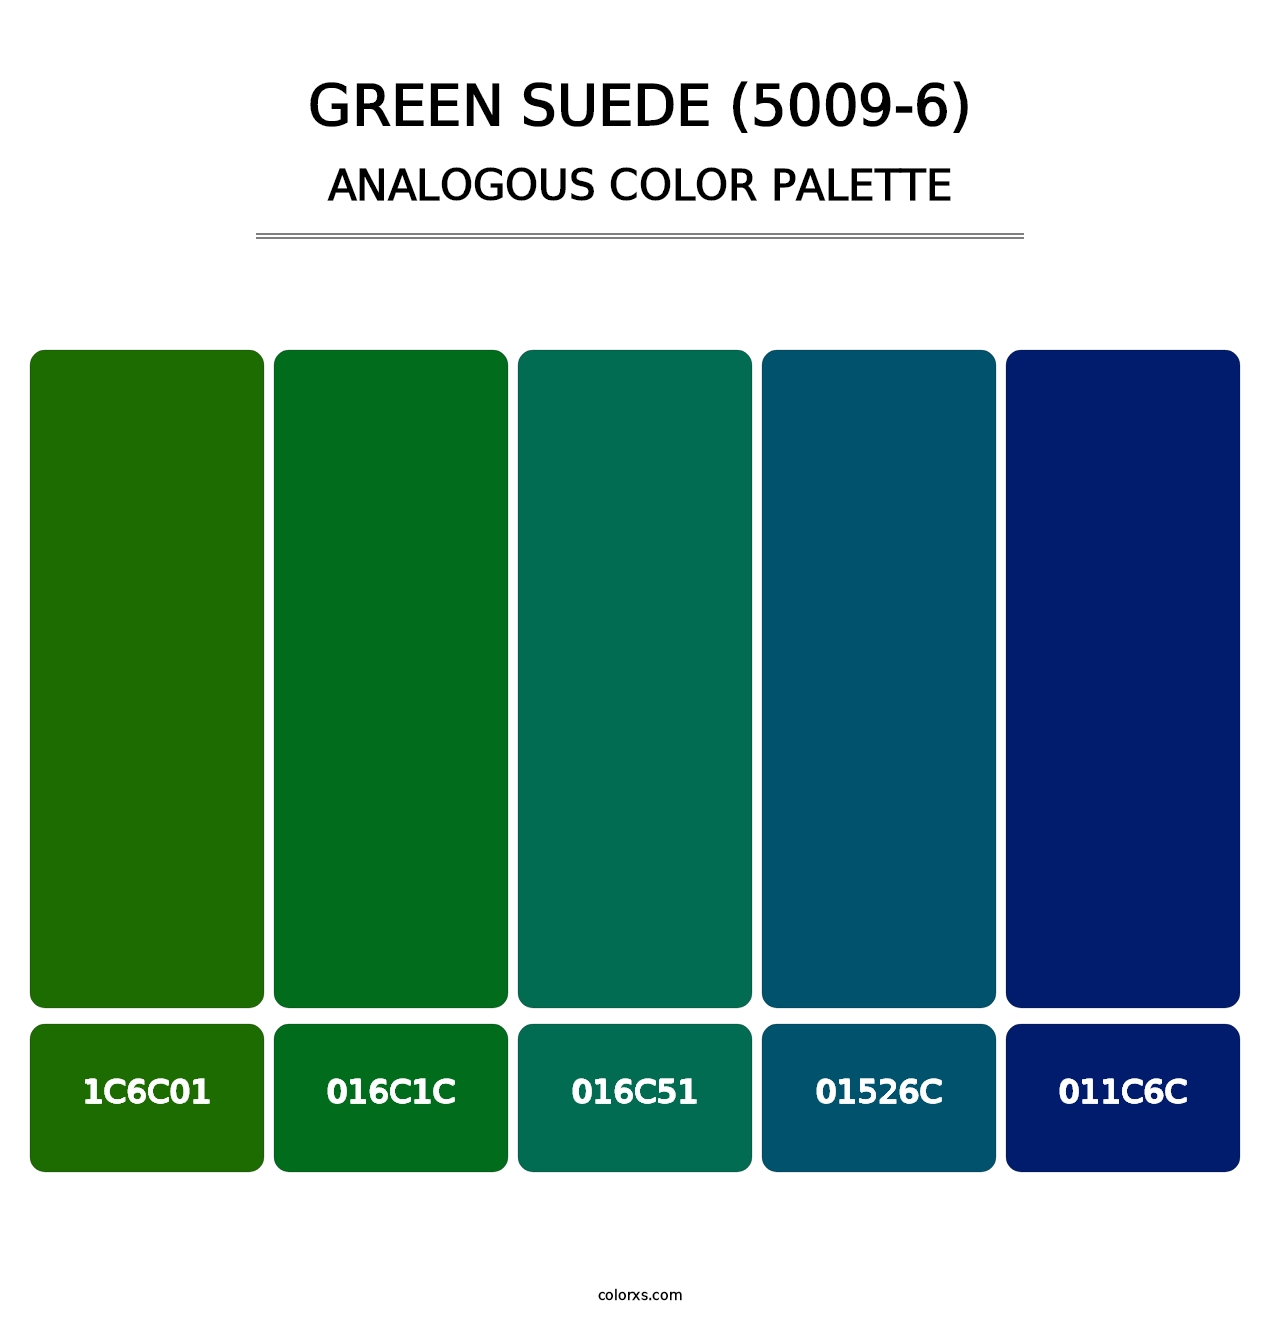 Green Suede (5009-6) - Analogous Color Palette